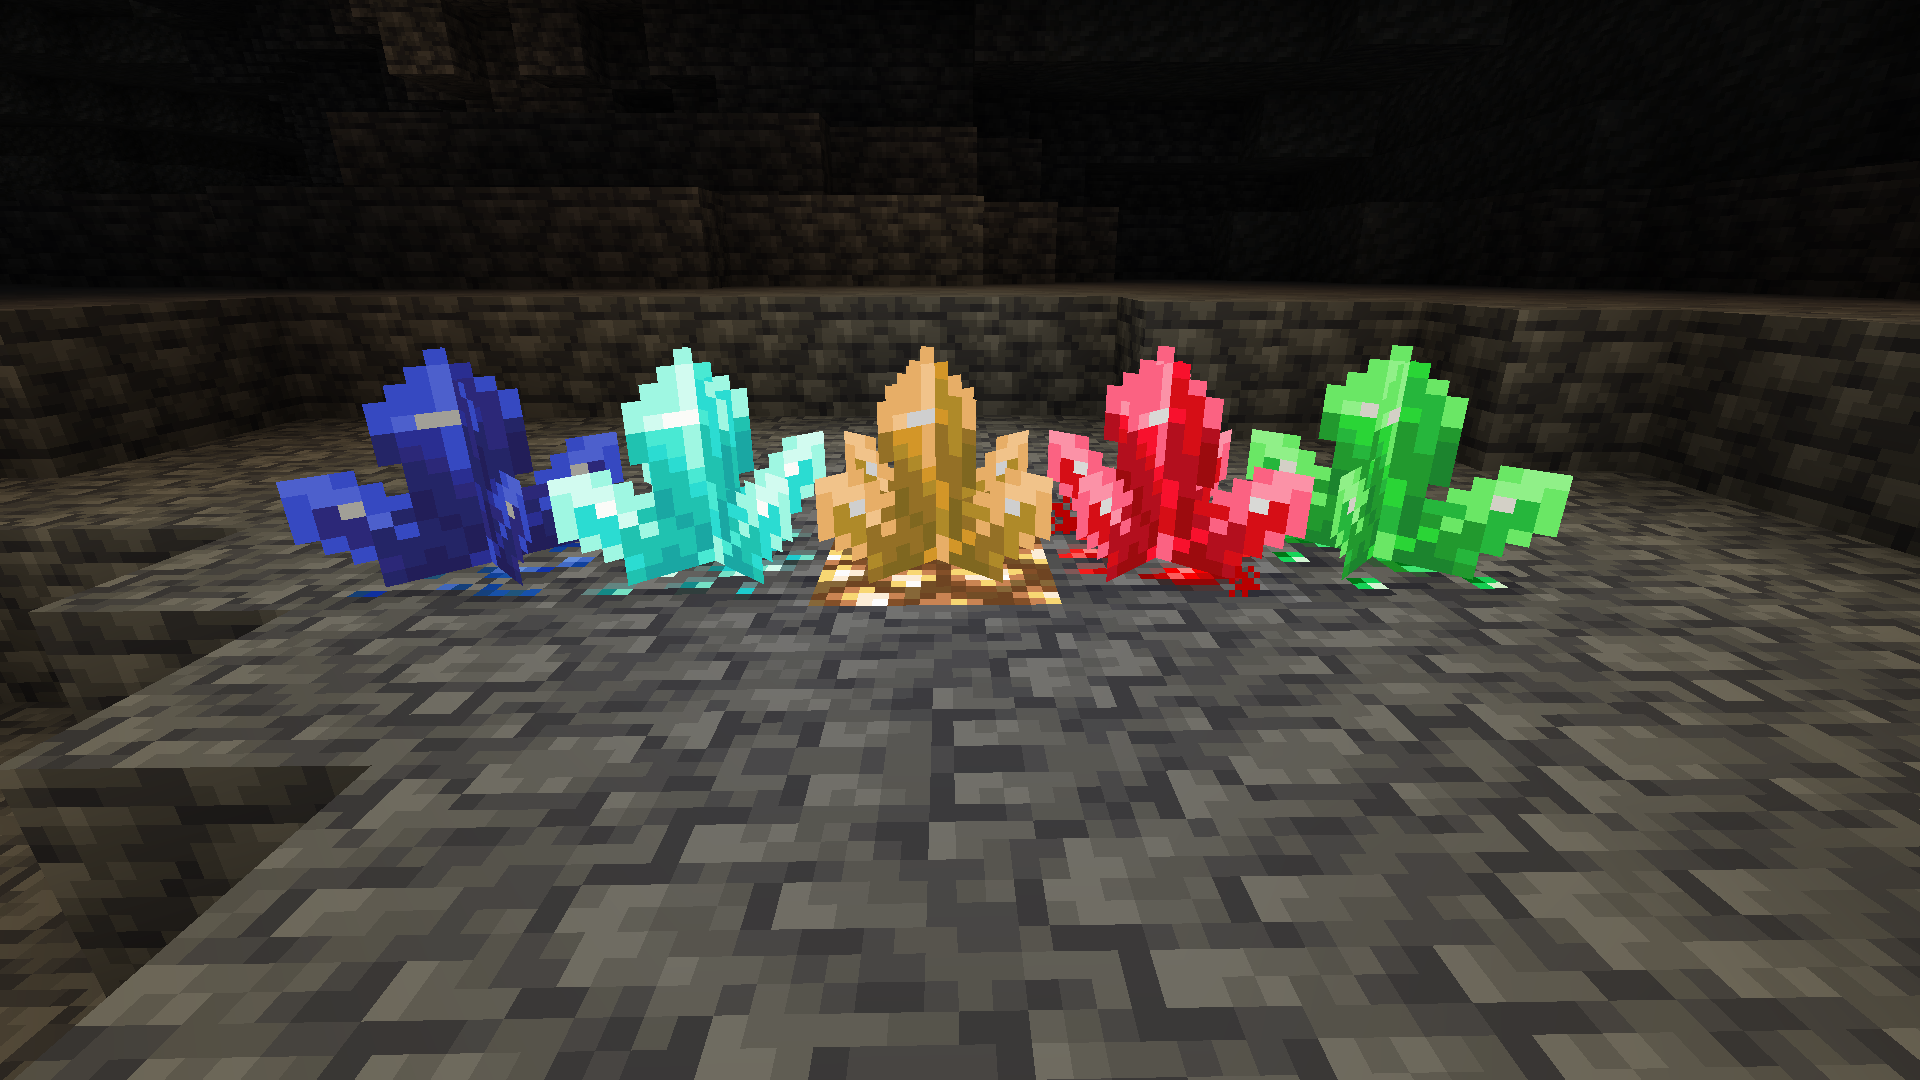 All crystals